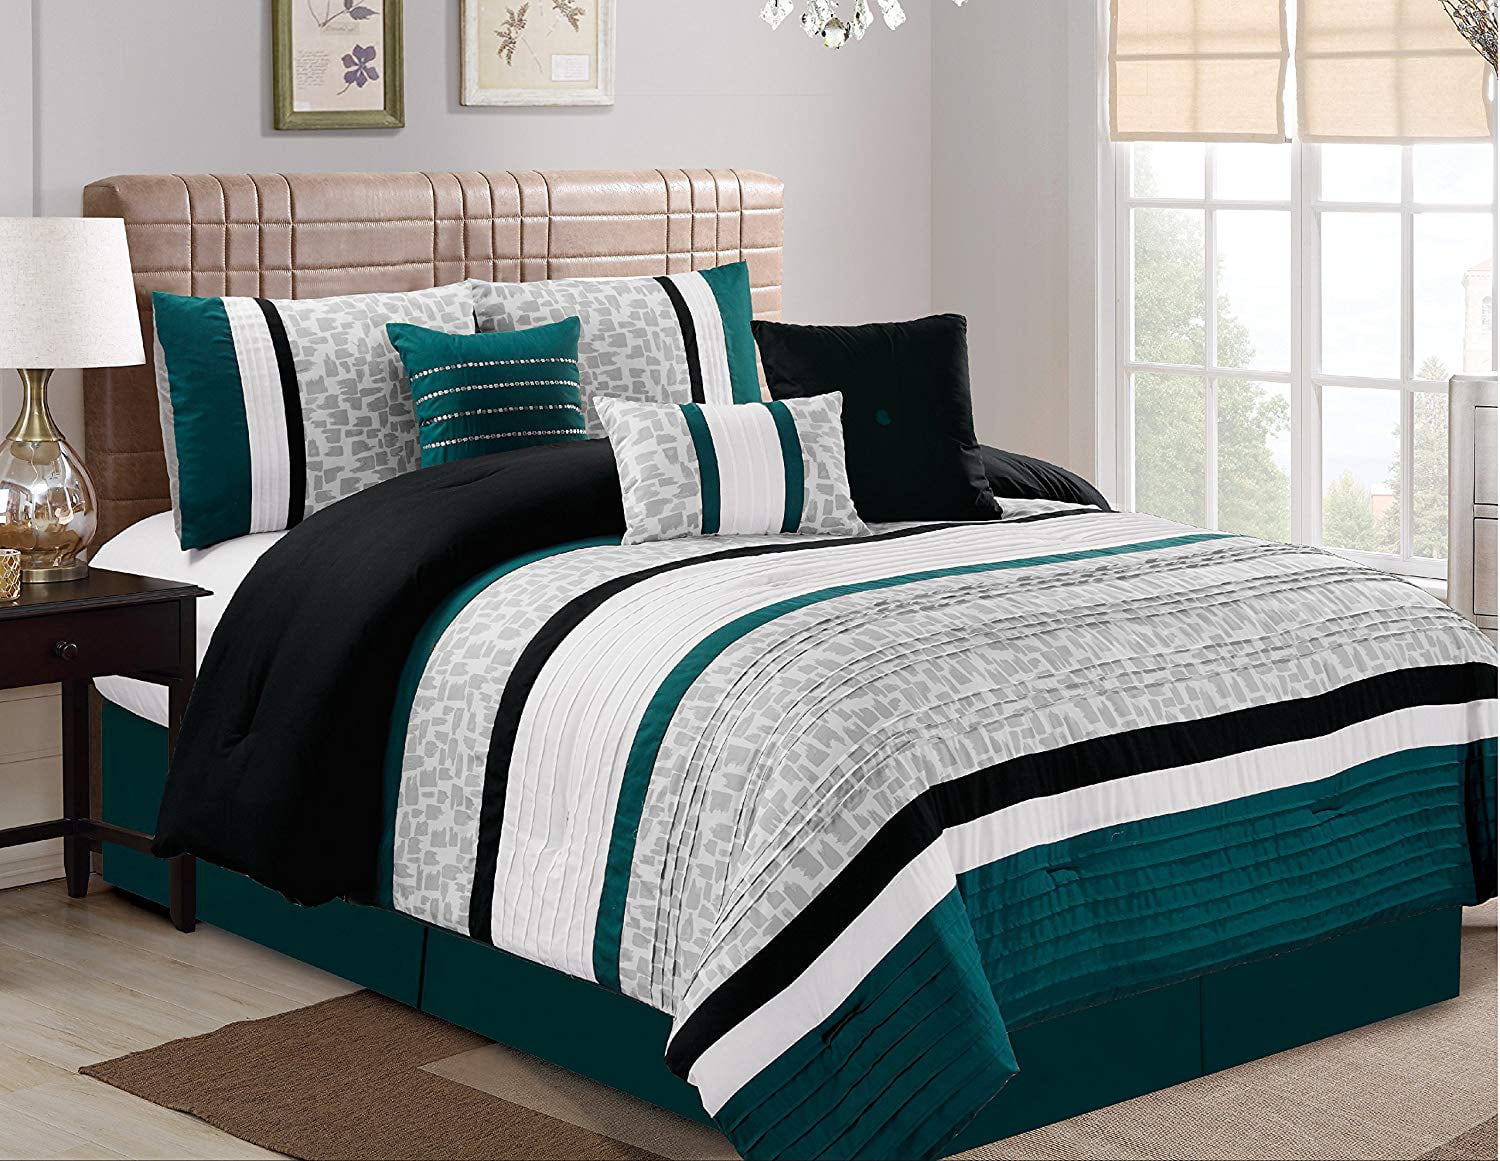 Hgmart Bedding Comforter Set 7 Piece, Queen Size Bedding Sheet Set